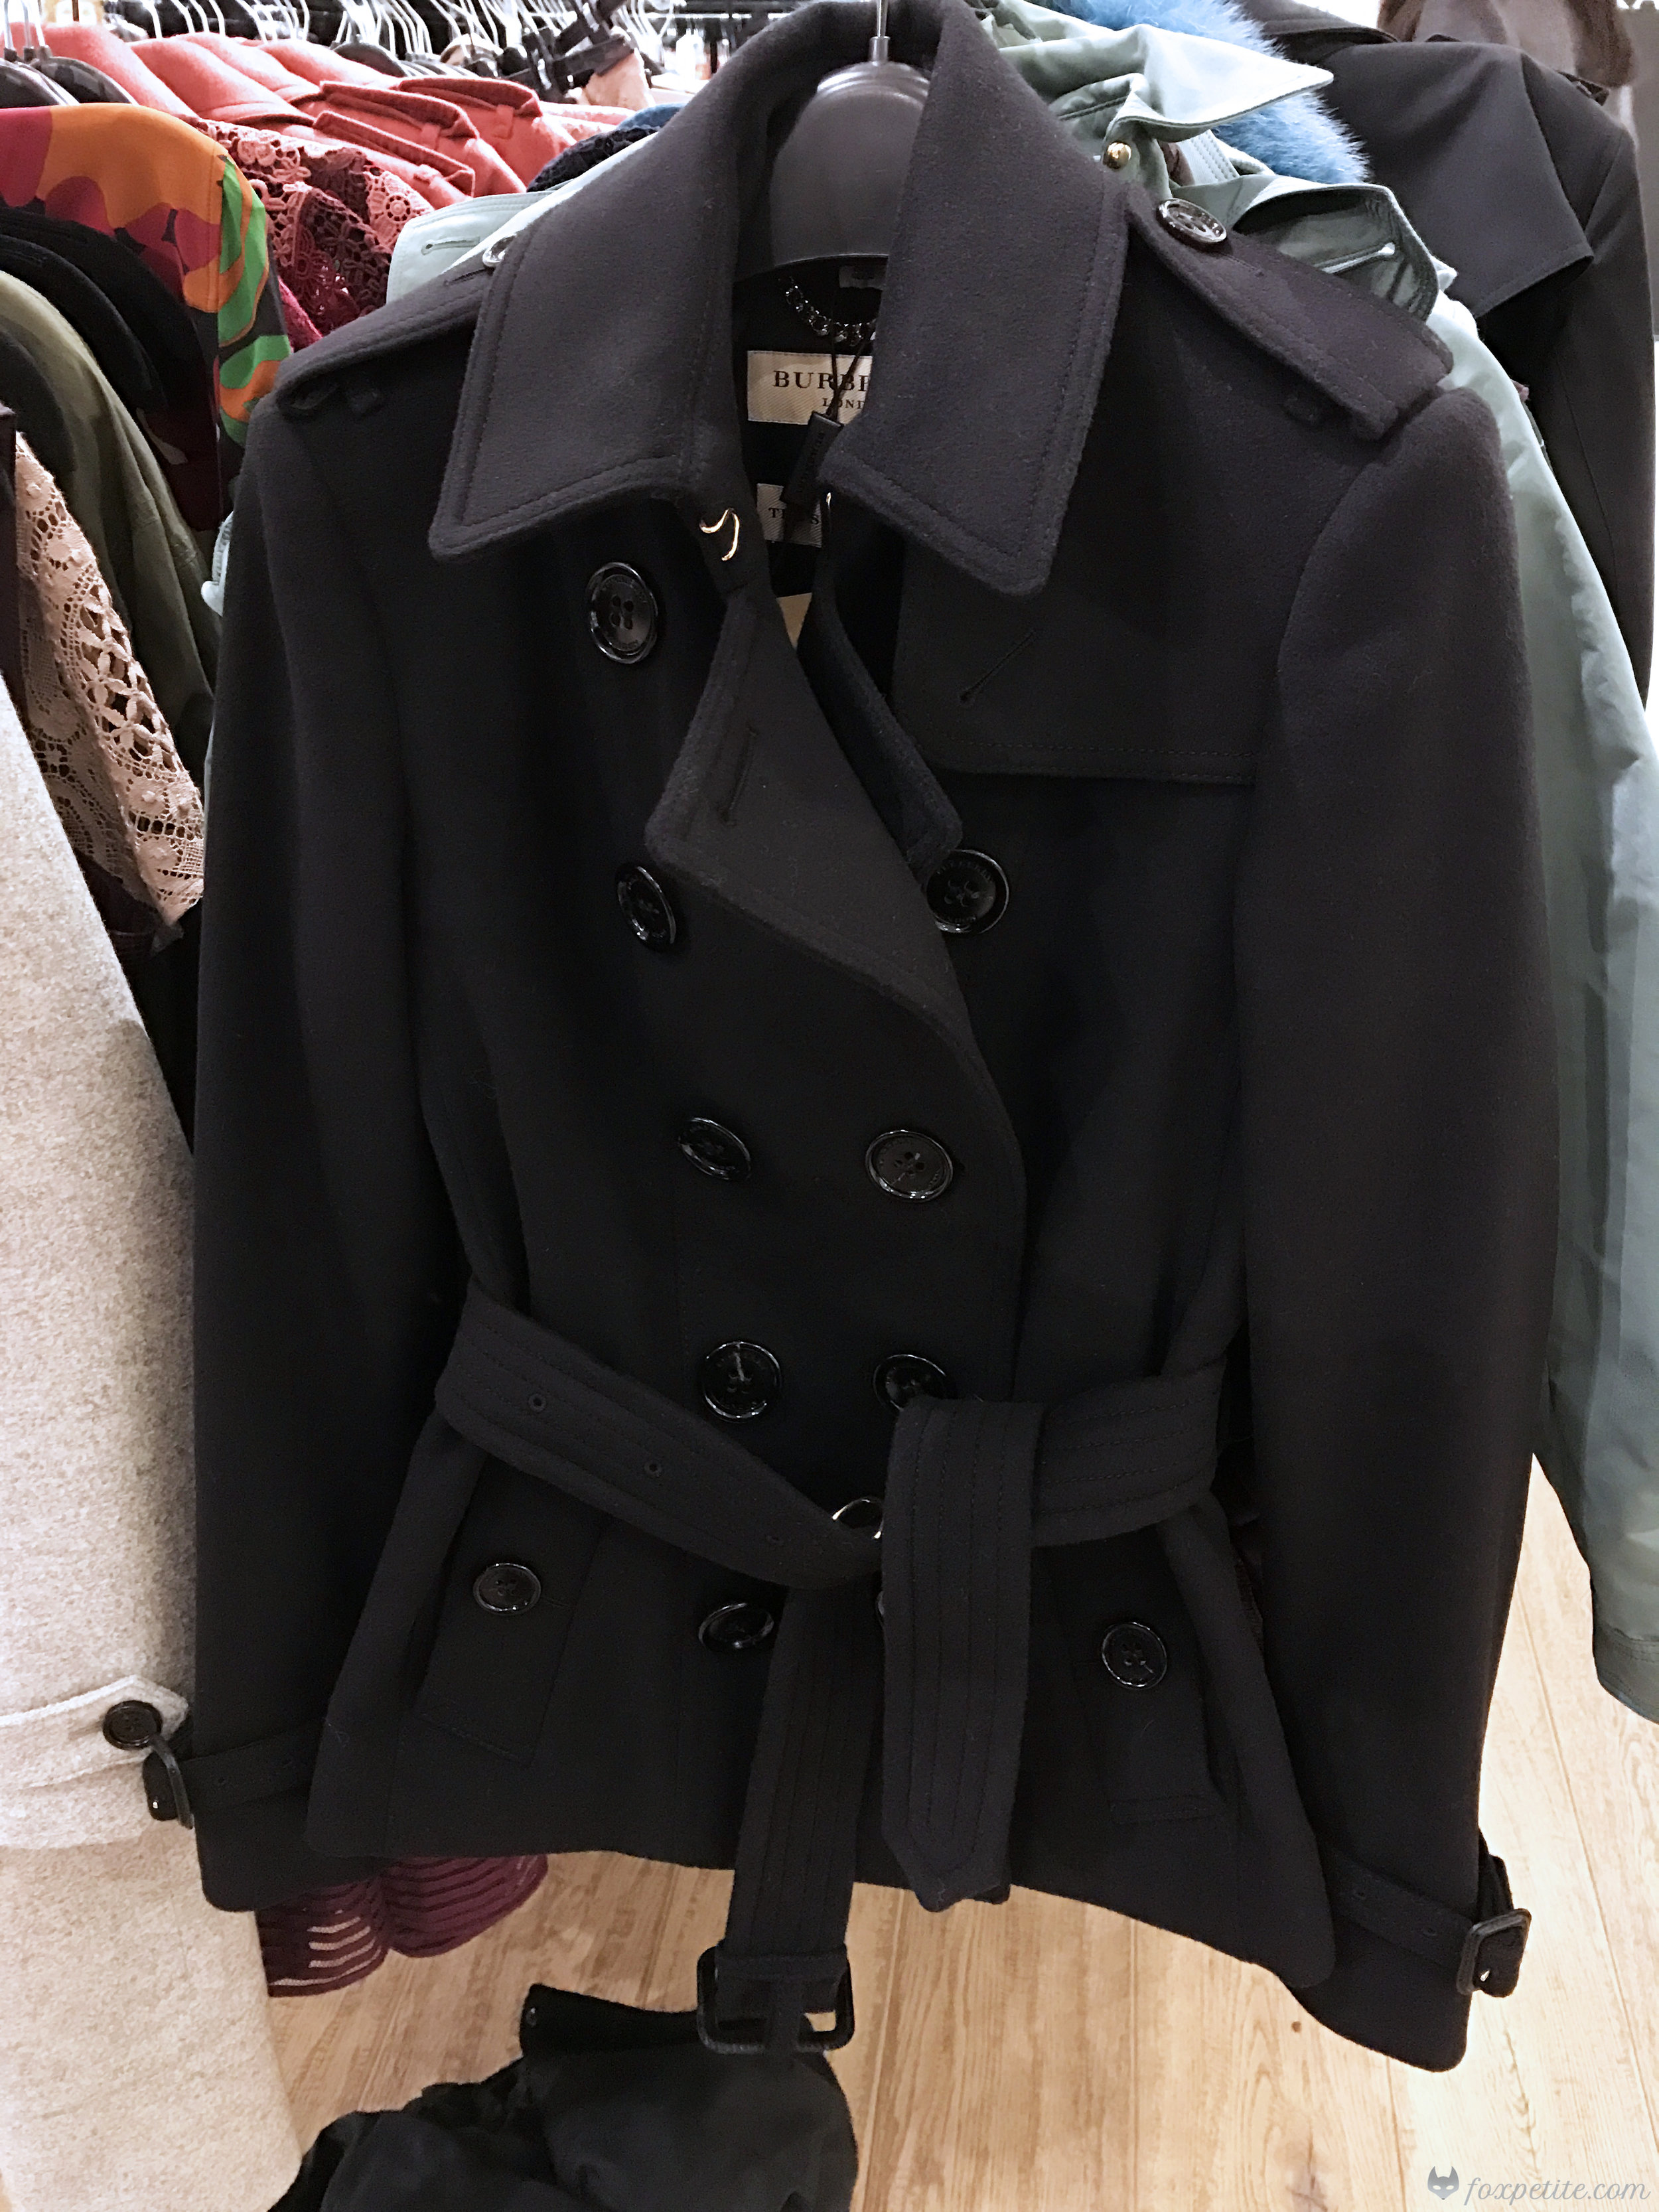 Burberry Coat Dreams — Fox Petite | Women's Fashion Blog